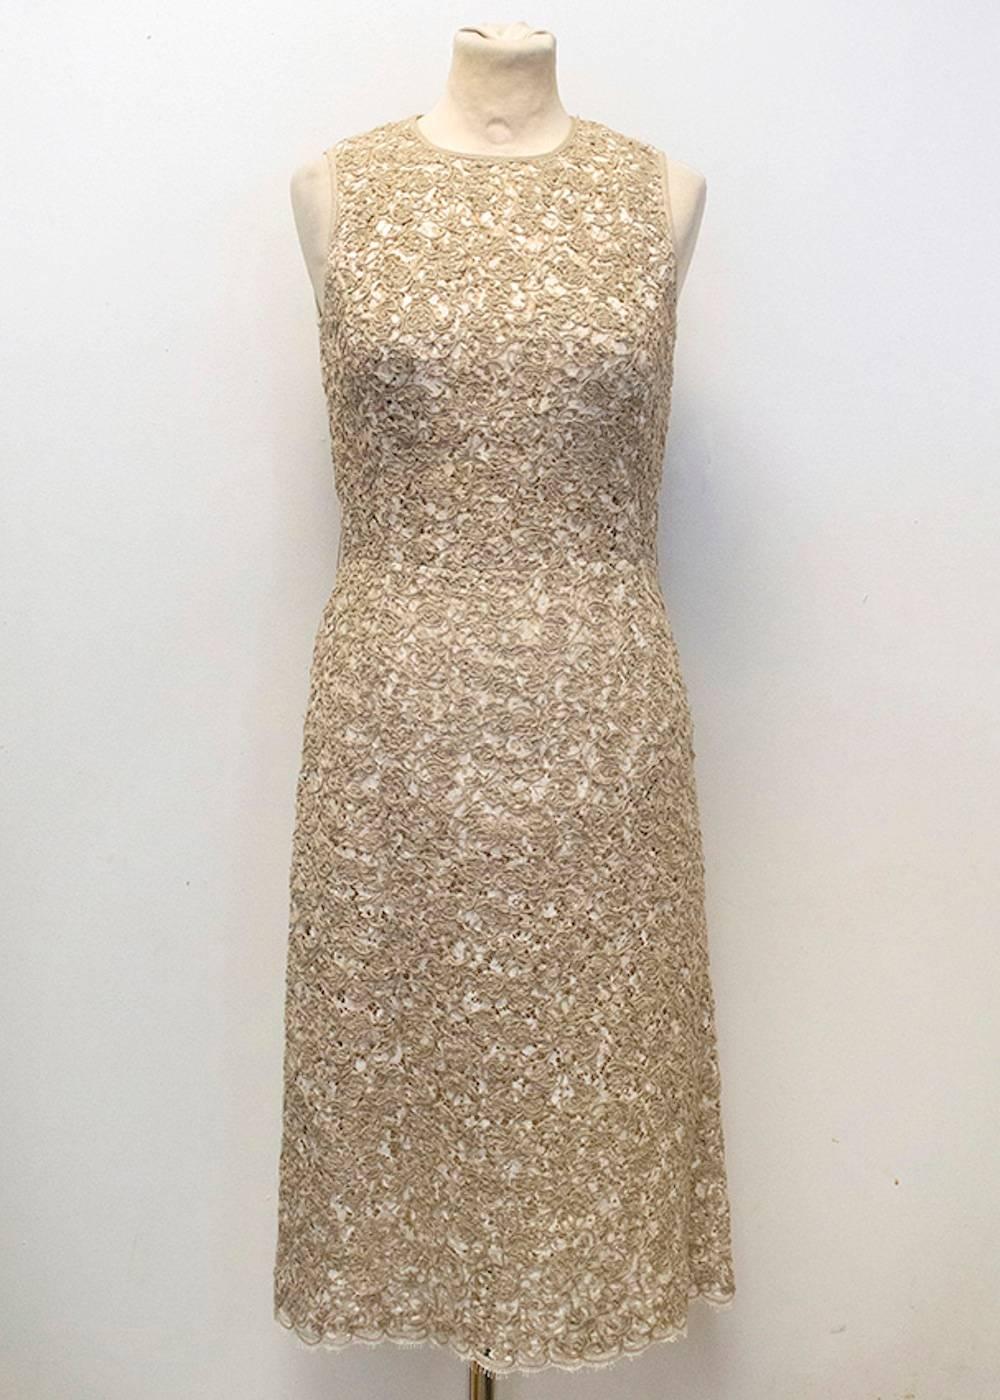 Michael Kors Textured Beige Cotton-Linen Dress For Sale 3